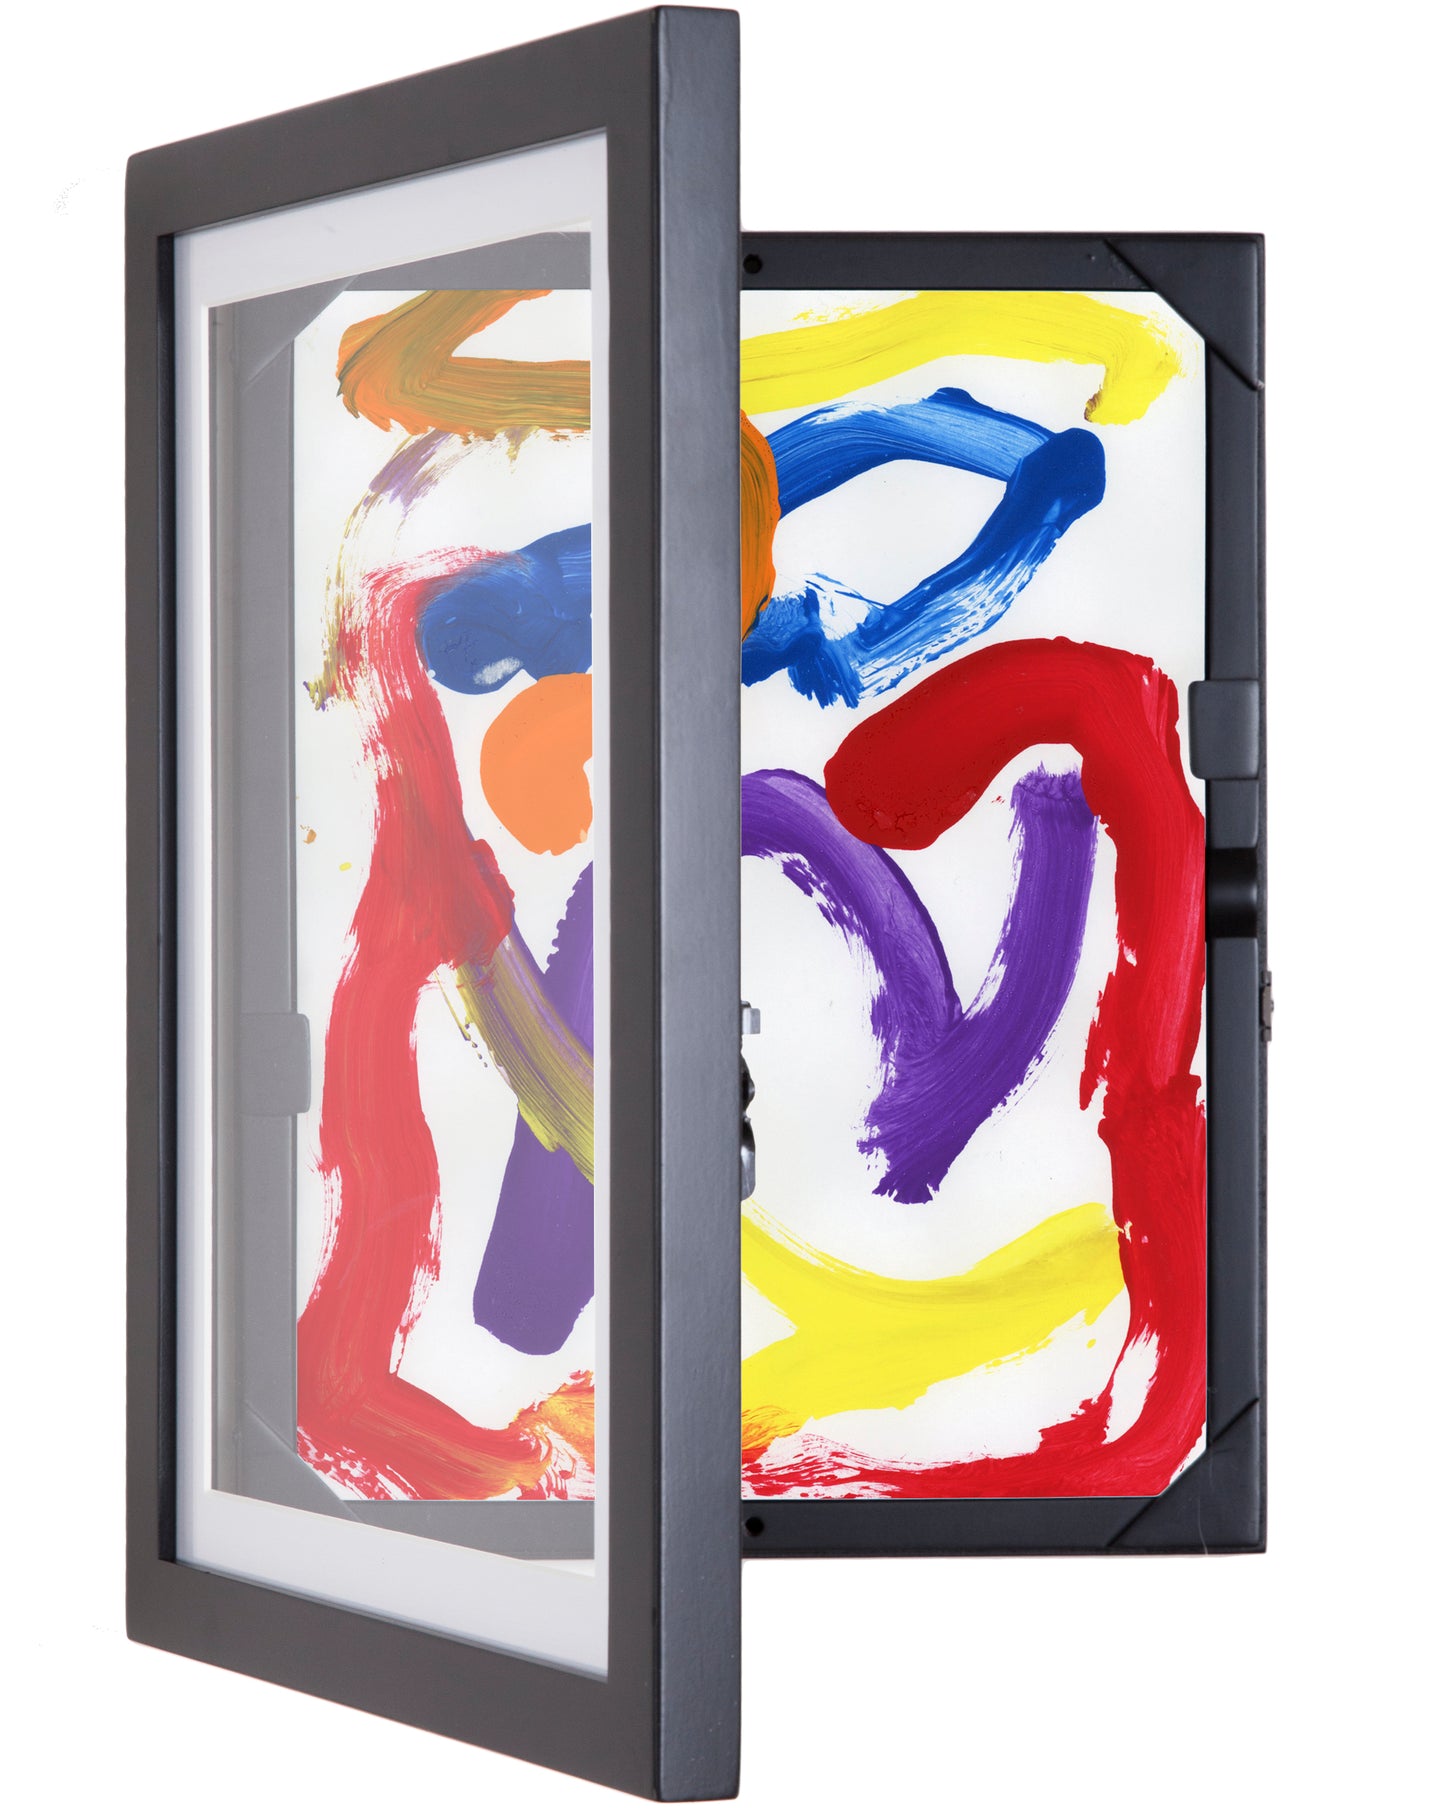 Lil Davinci Front-Opening Art Storage Frame